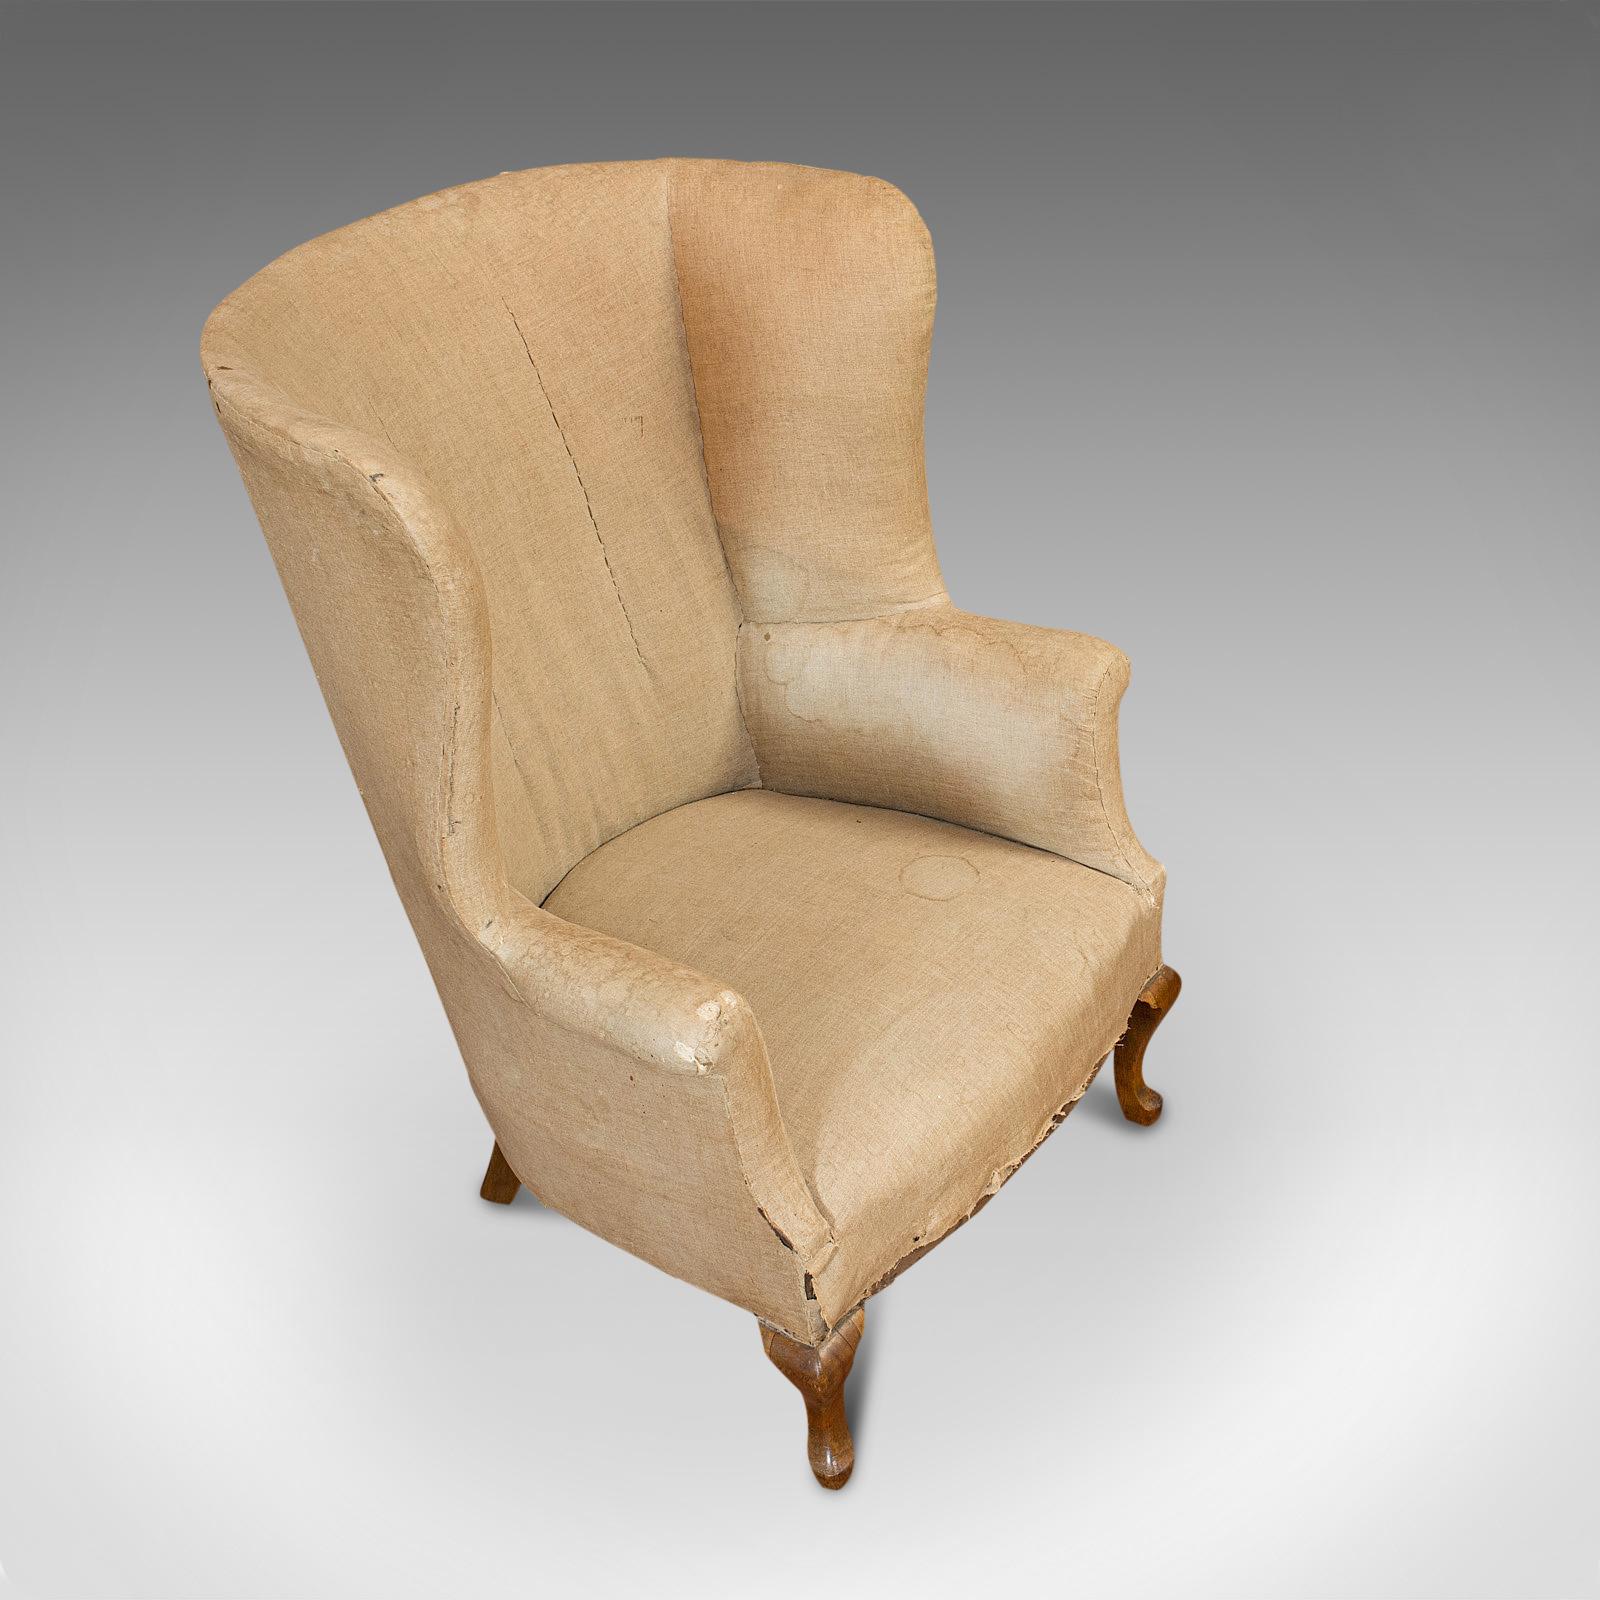 Walnut Antique Wing Armchair, English, Barrel-Back, Seat, Chair, Victorian, circa 1900